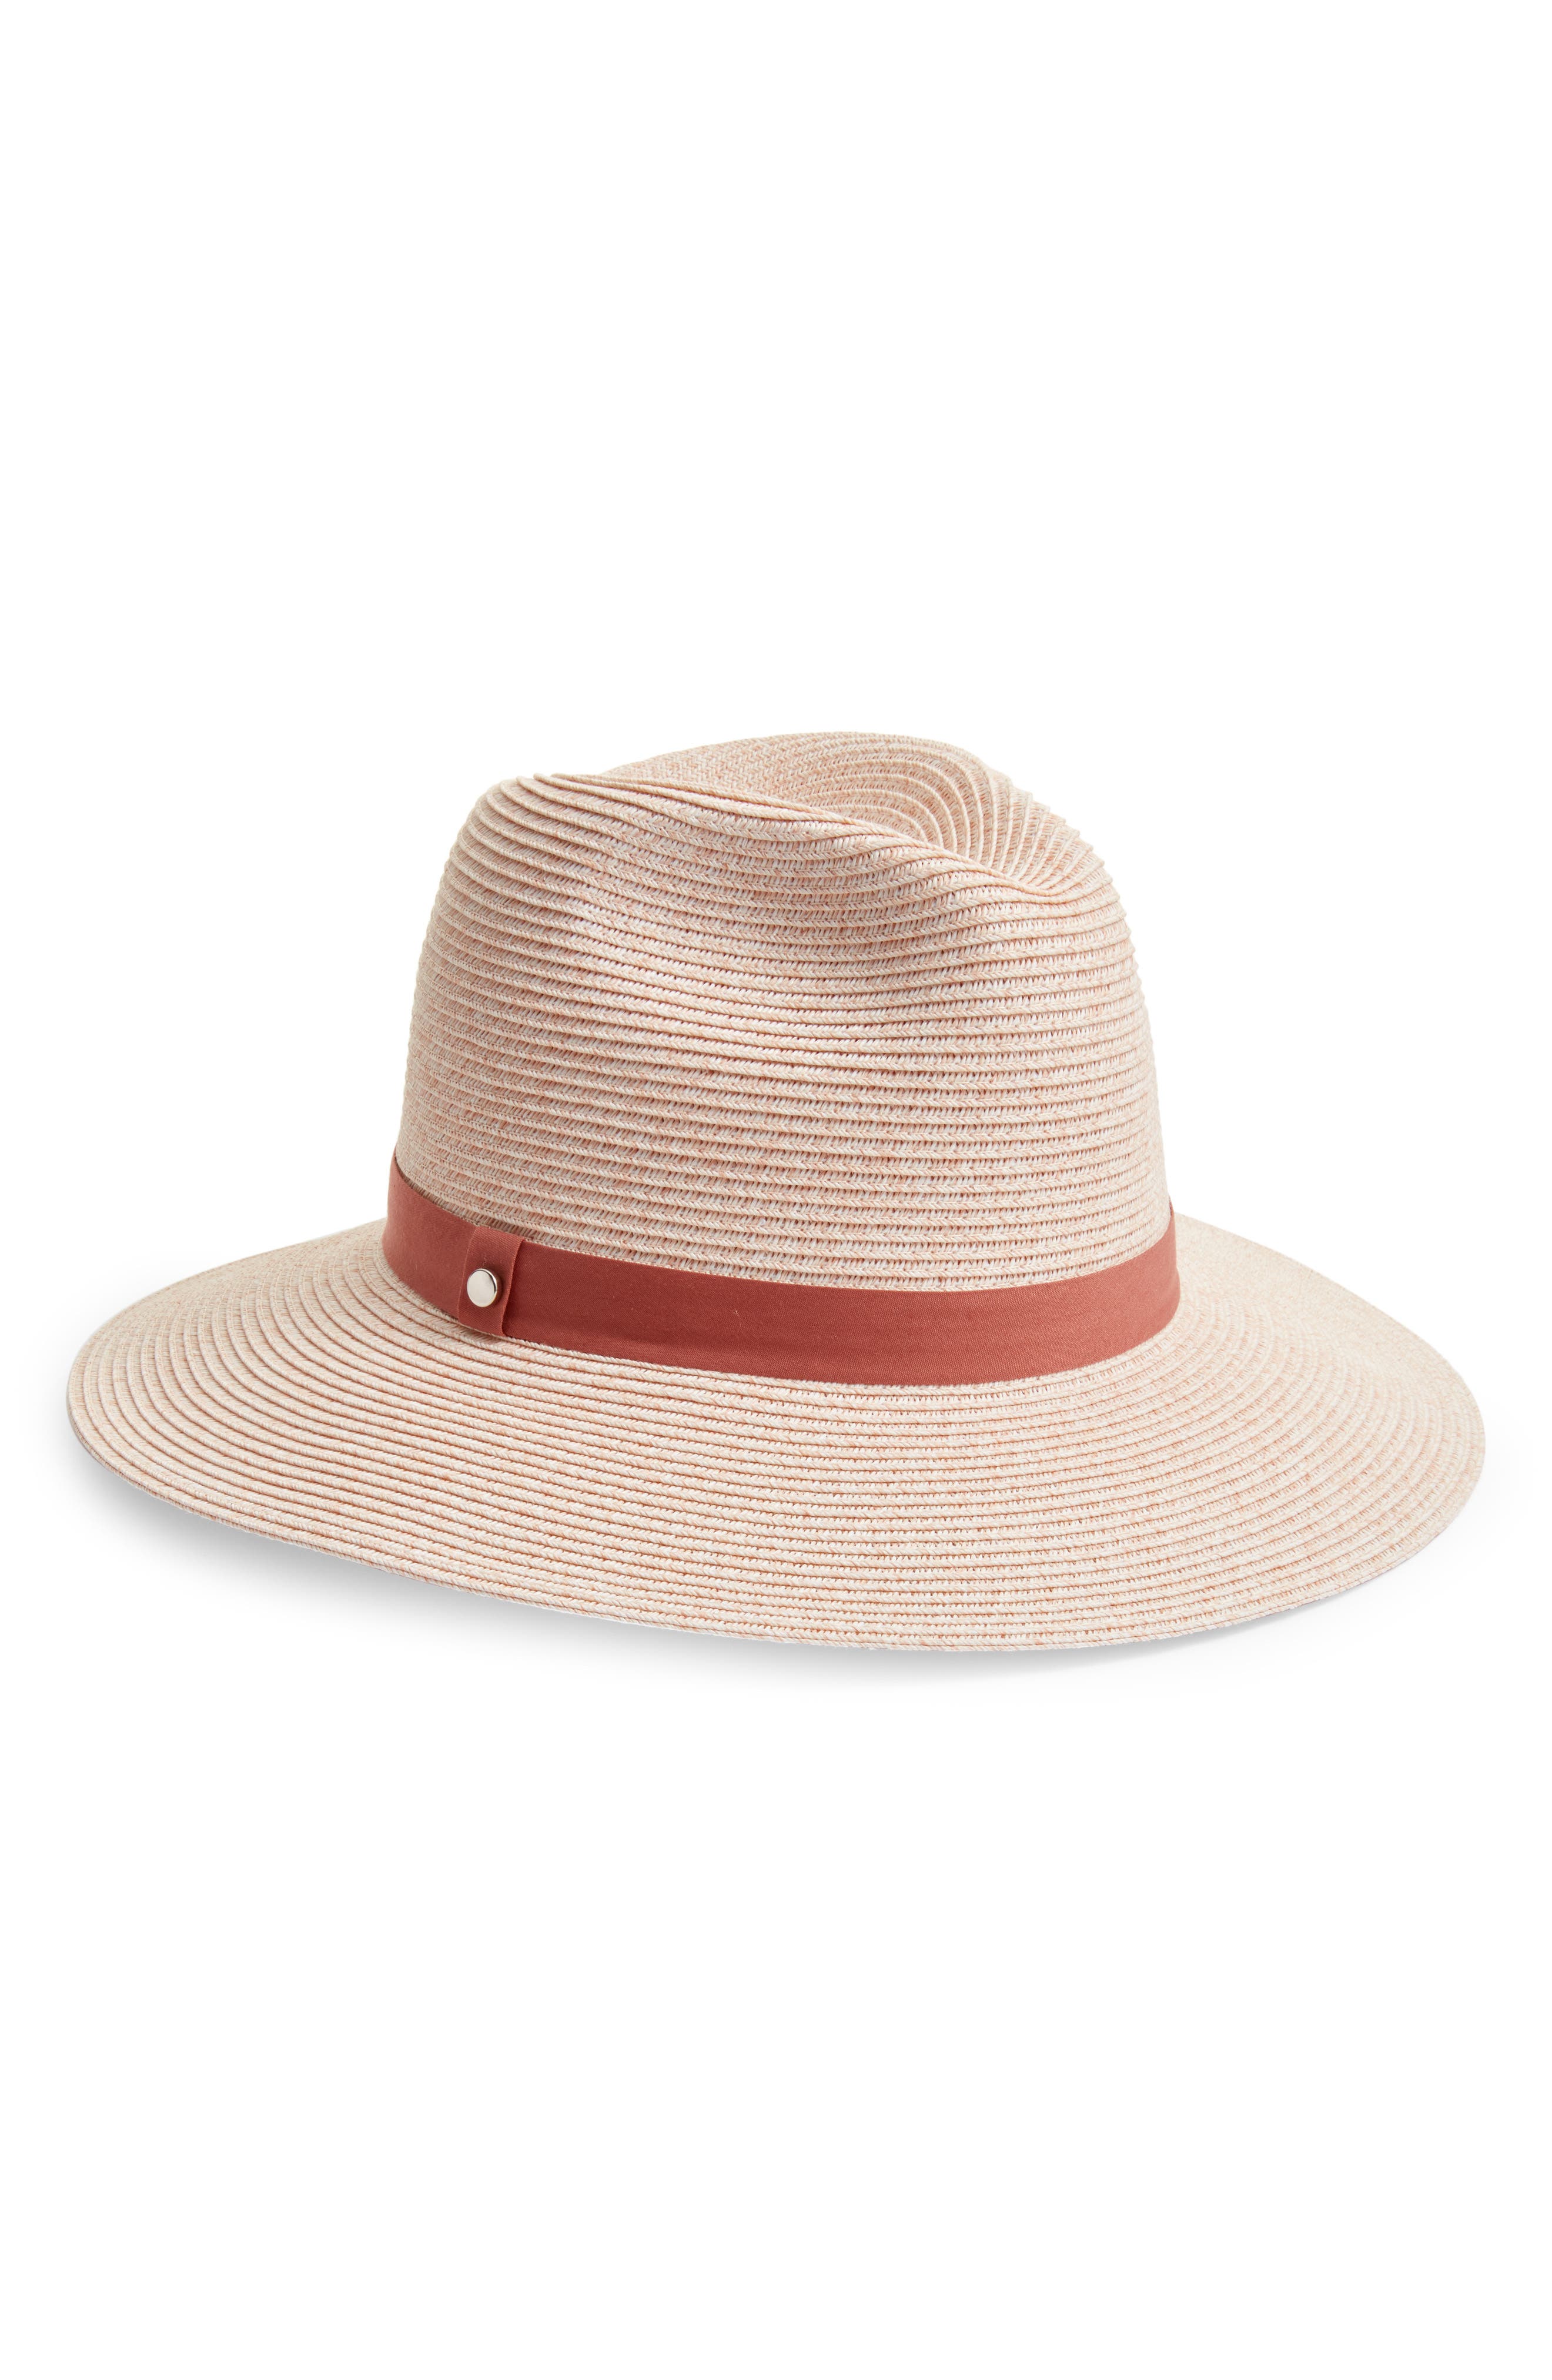 By Neki Mens Panama Shape Style Hat with Black Hat Band